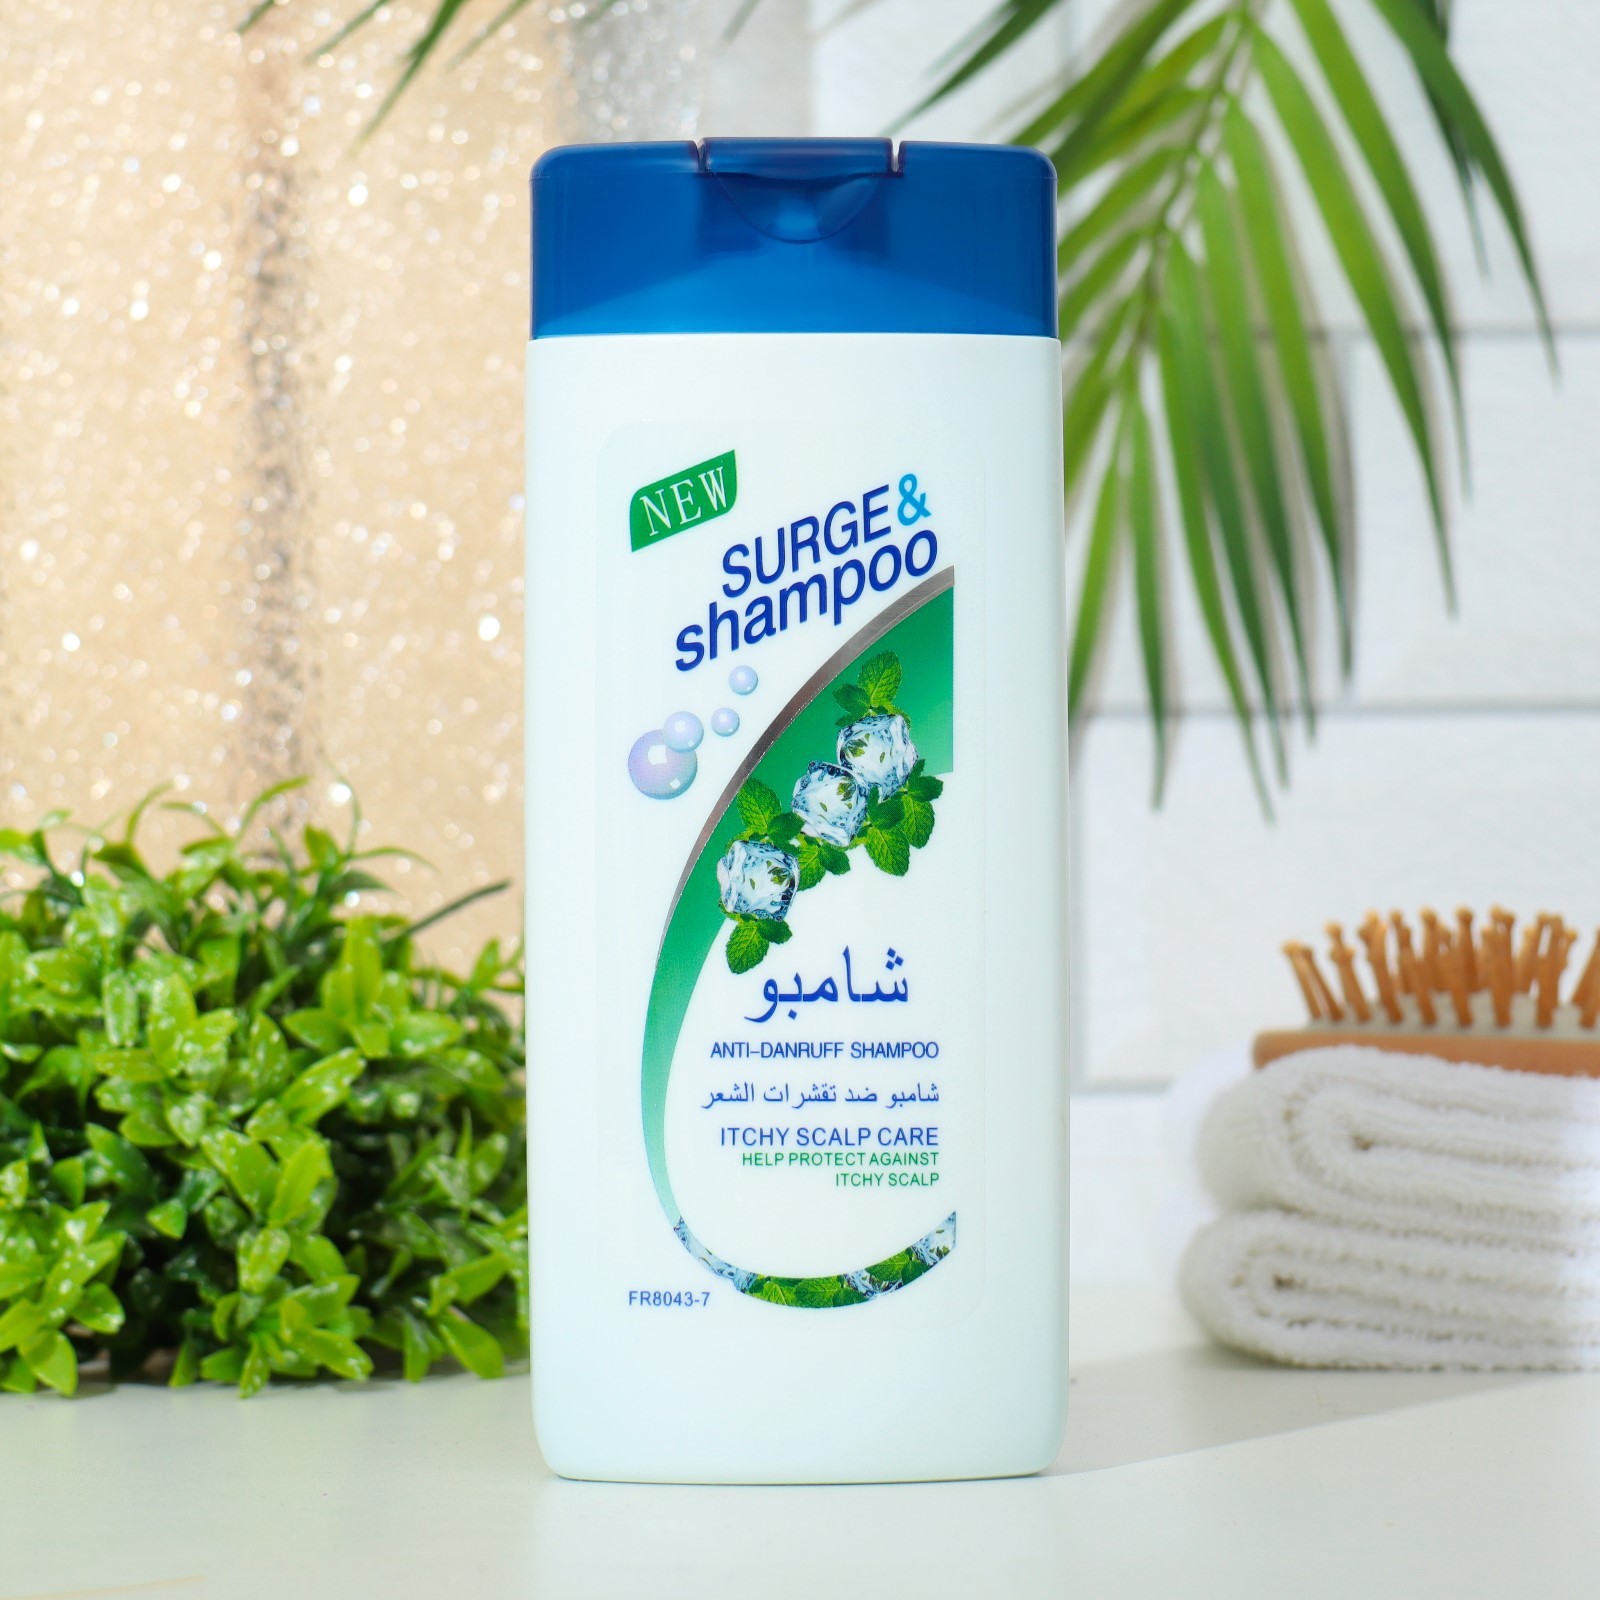 Шампунь Surge&shampoo для волос с мятой 400 мл шампунь 4fresh beauty балансирующий для жирных волос с мятой и пребиотиками 250 мл